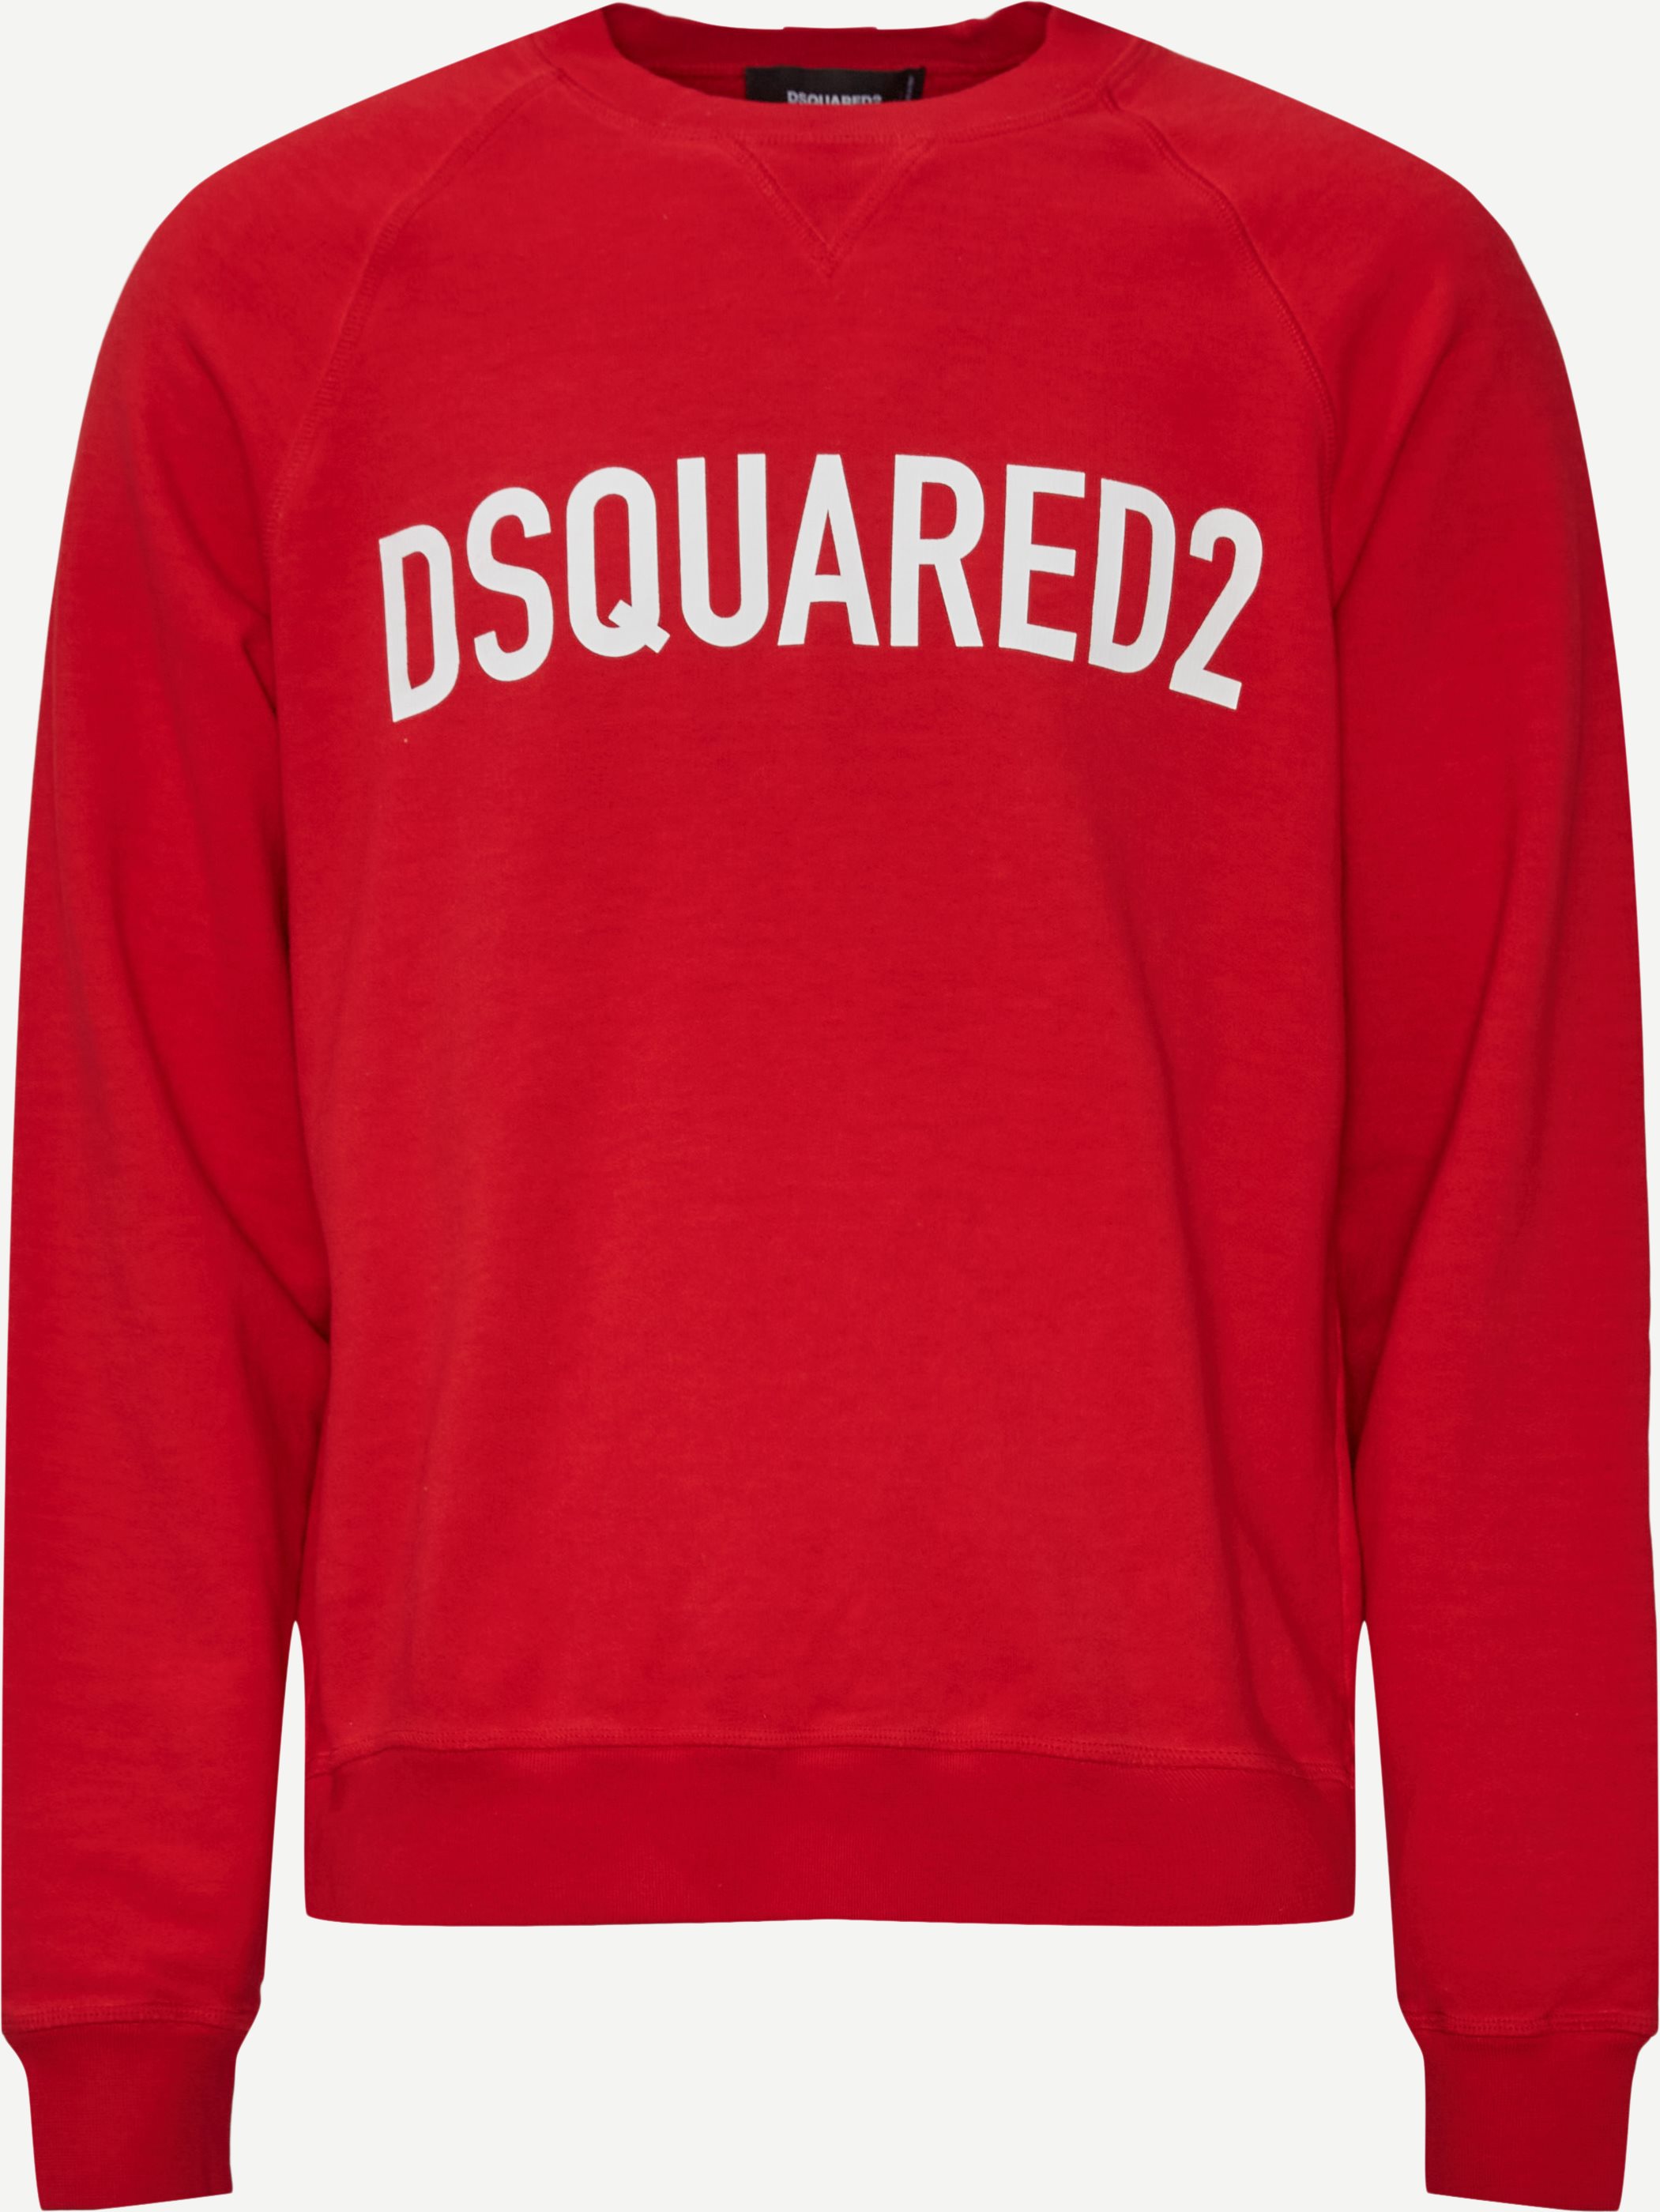 Sweatshirts - Regular fit - Red